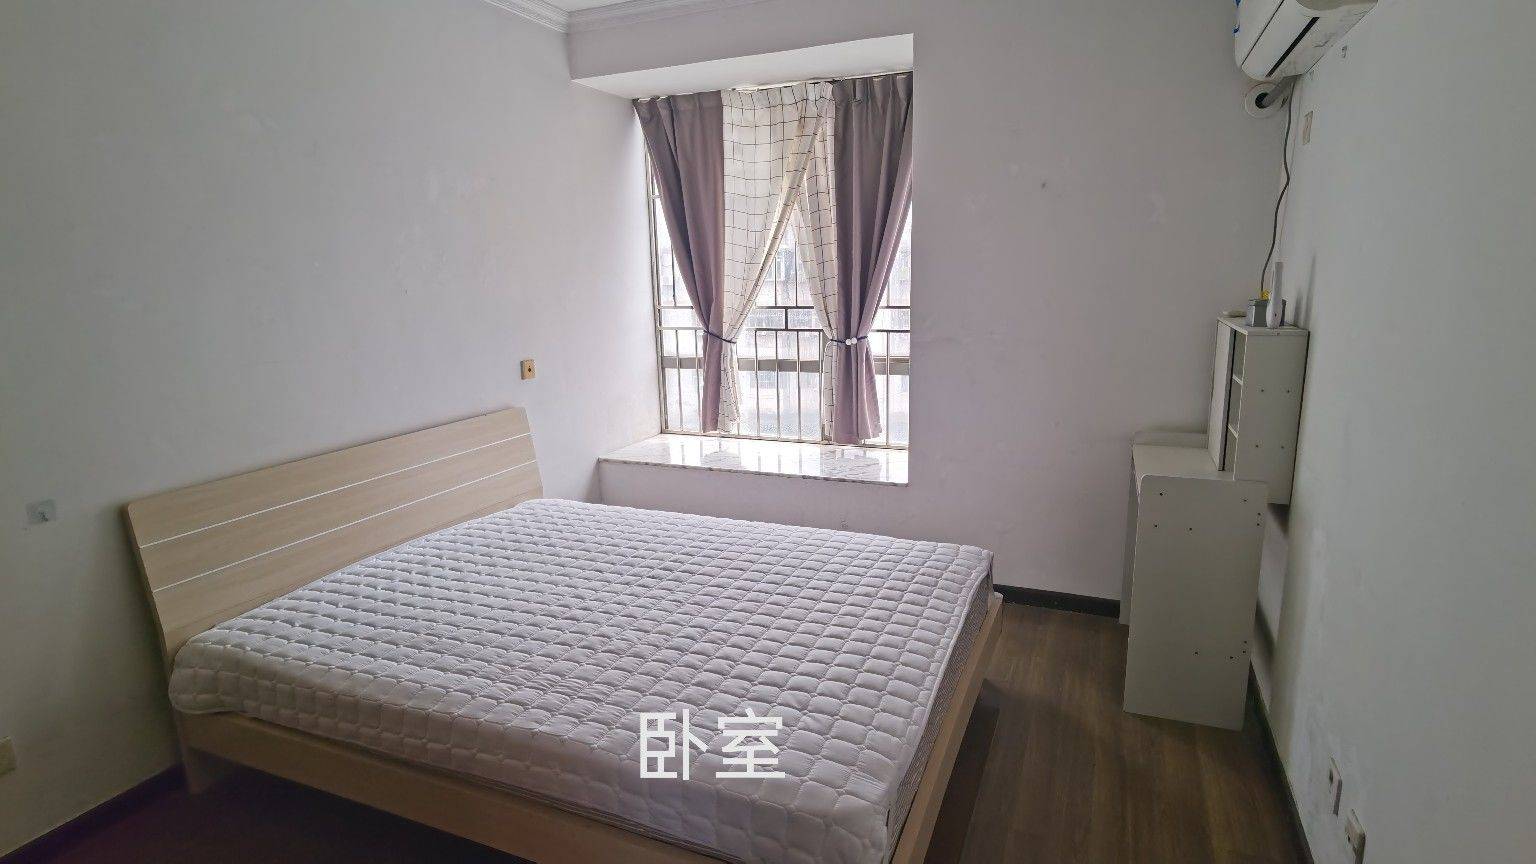 Shenzhen-Longhua-Cozy Home,Clean&Comfy,No Gender Limit,Chilled,Pet Friendly